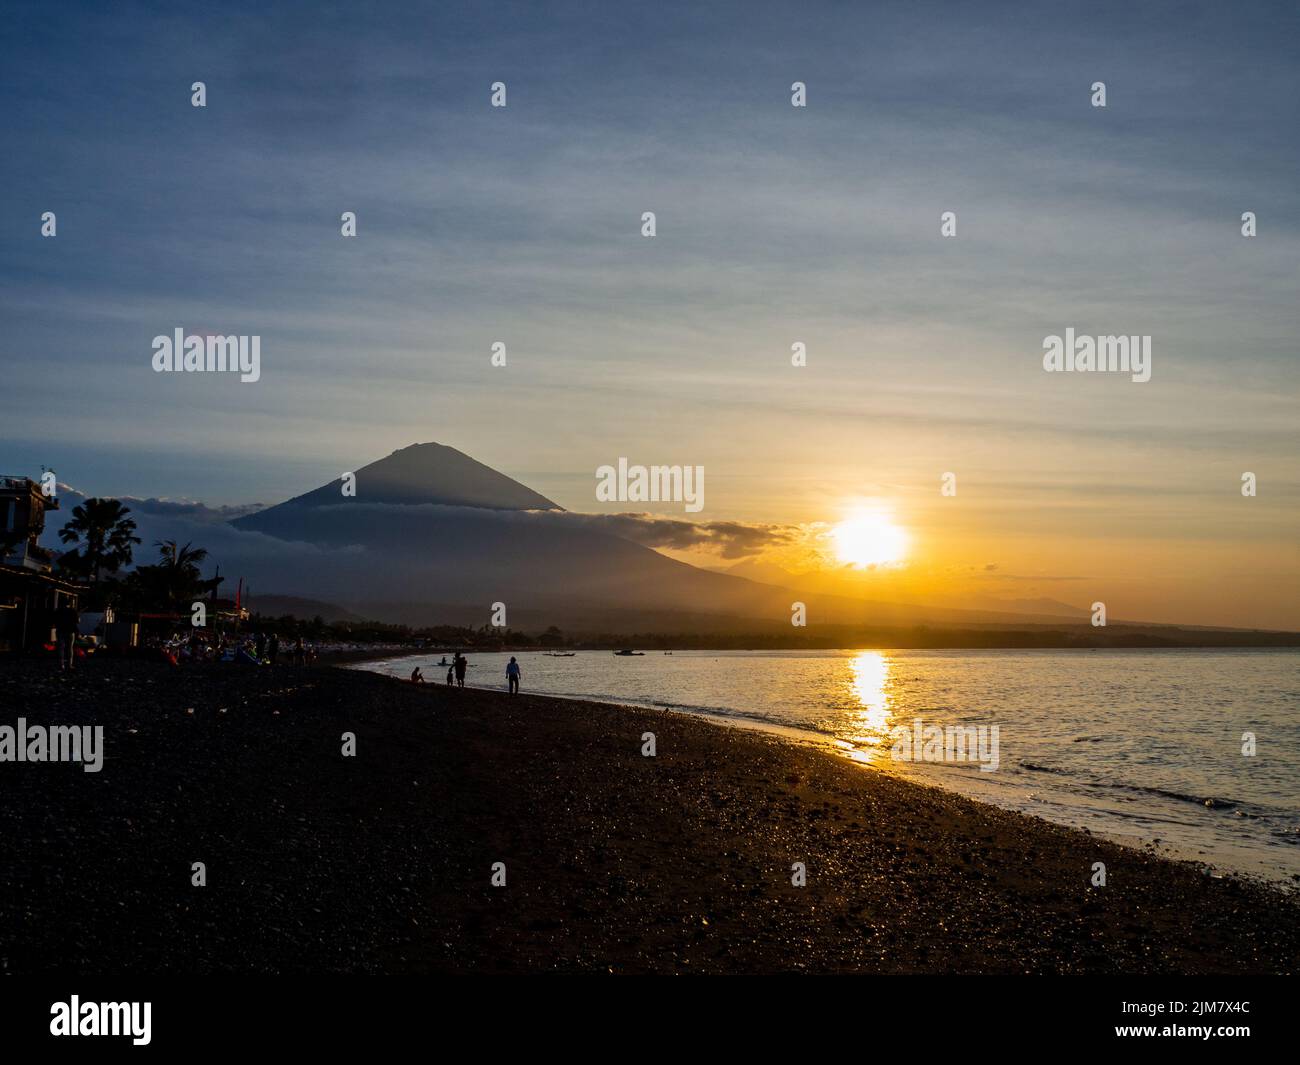 Tramonto / Sonnenuntergang, Spiaggia Amed, Amed, Bali, Indonesien Foto Stock